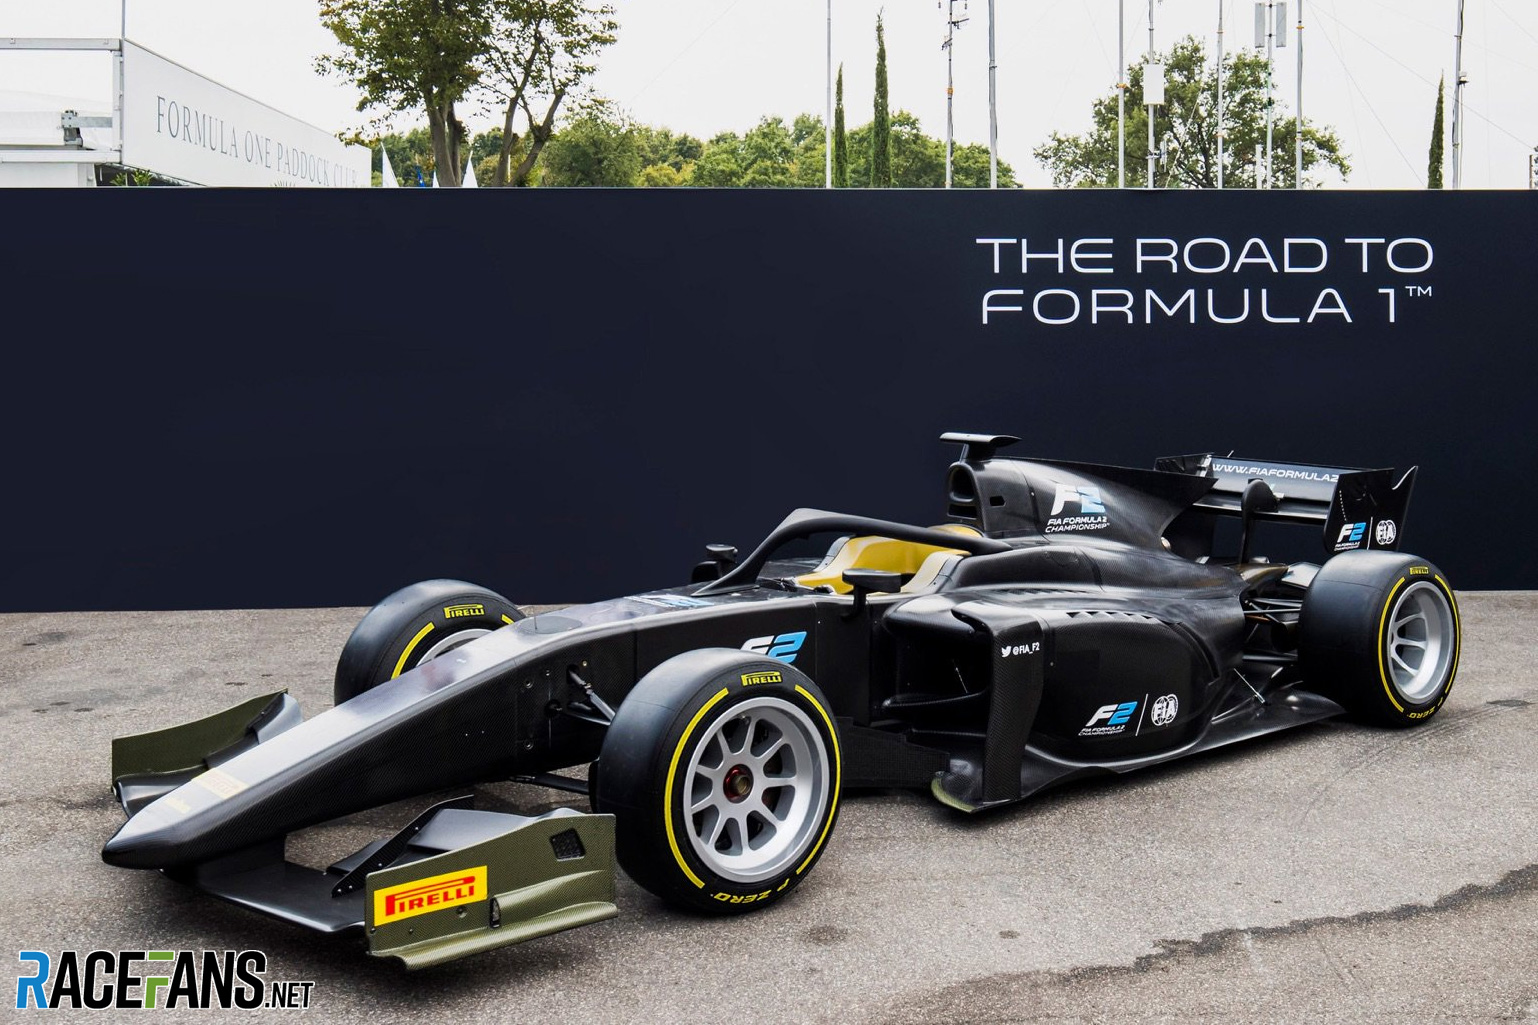 F2 car with 18-inch wheels, Circuit de Catalunya, 2019